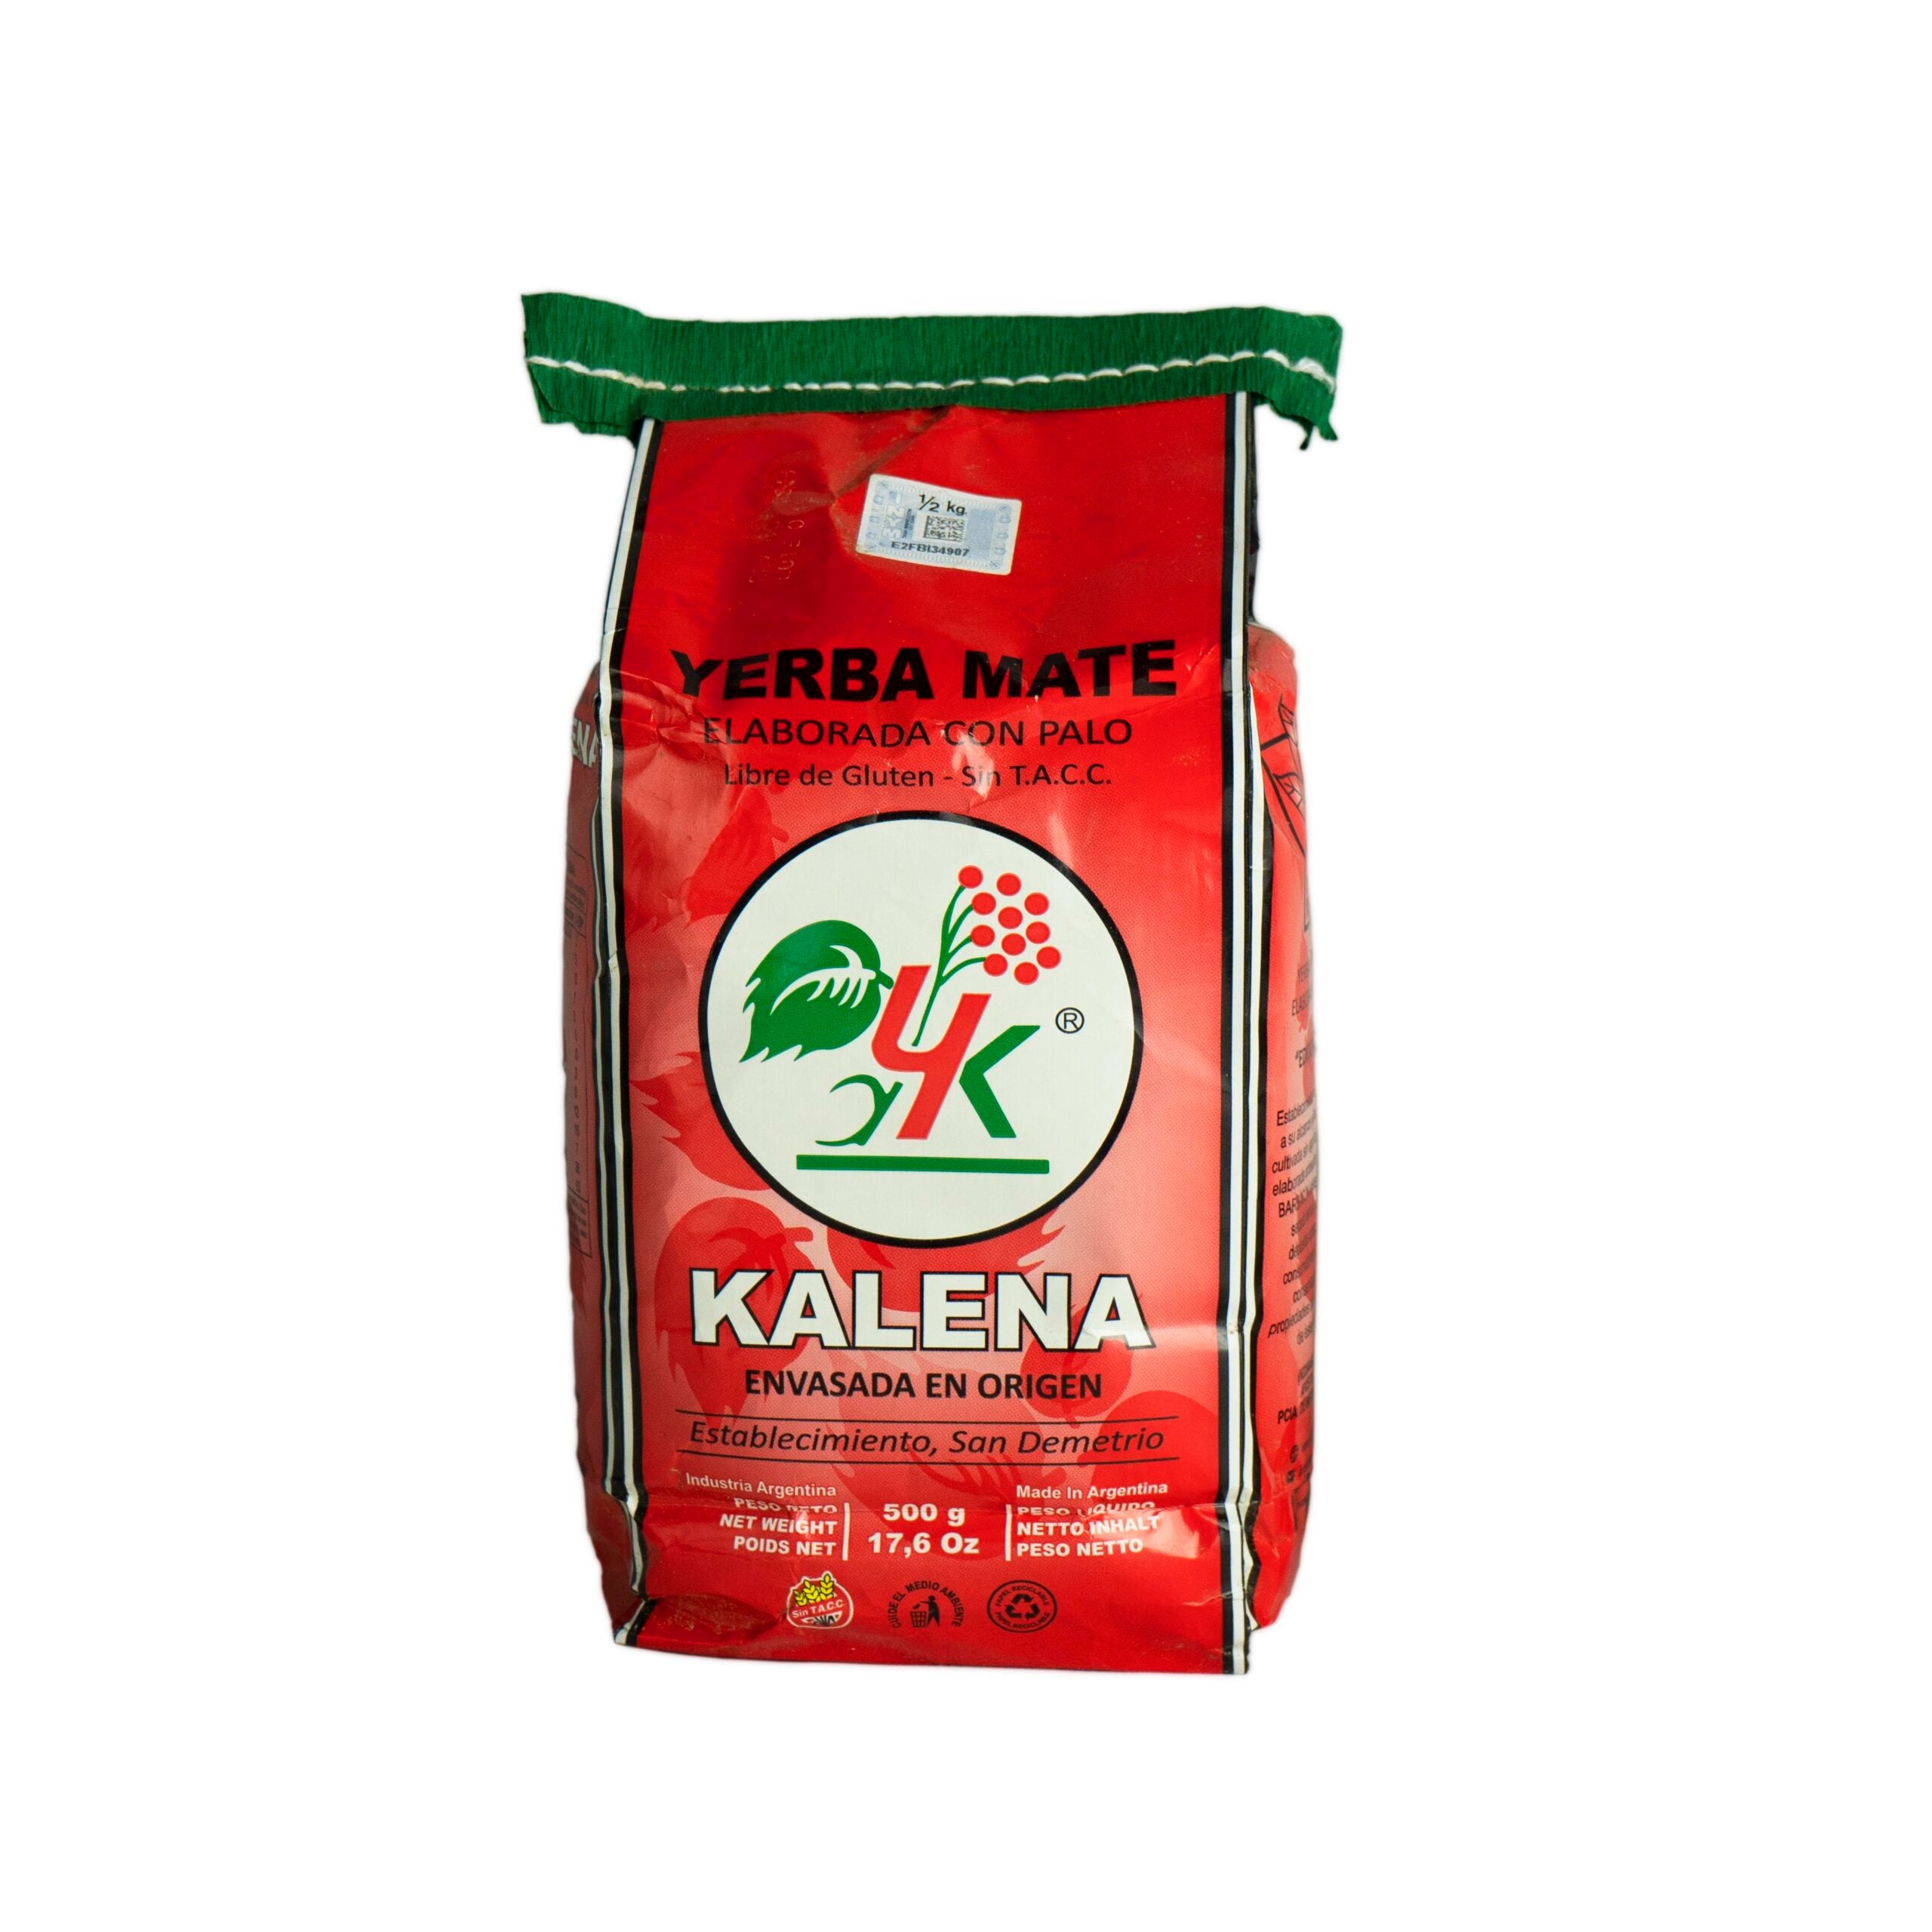 Yerba Mate Kalena Traditional 500 g / 1.1Lb